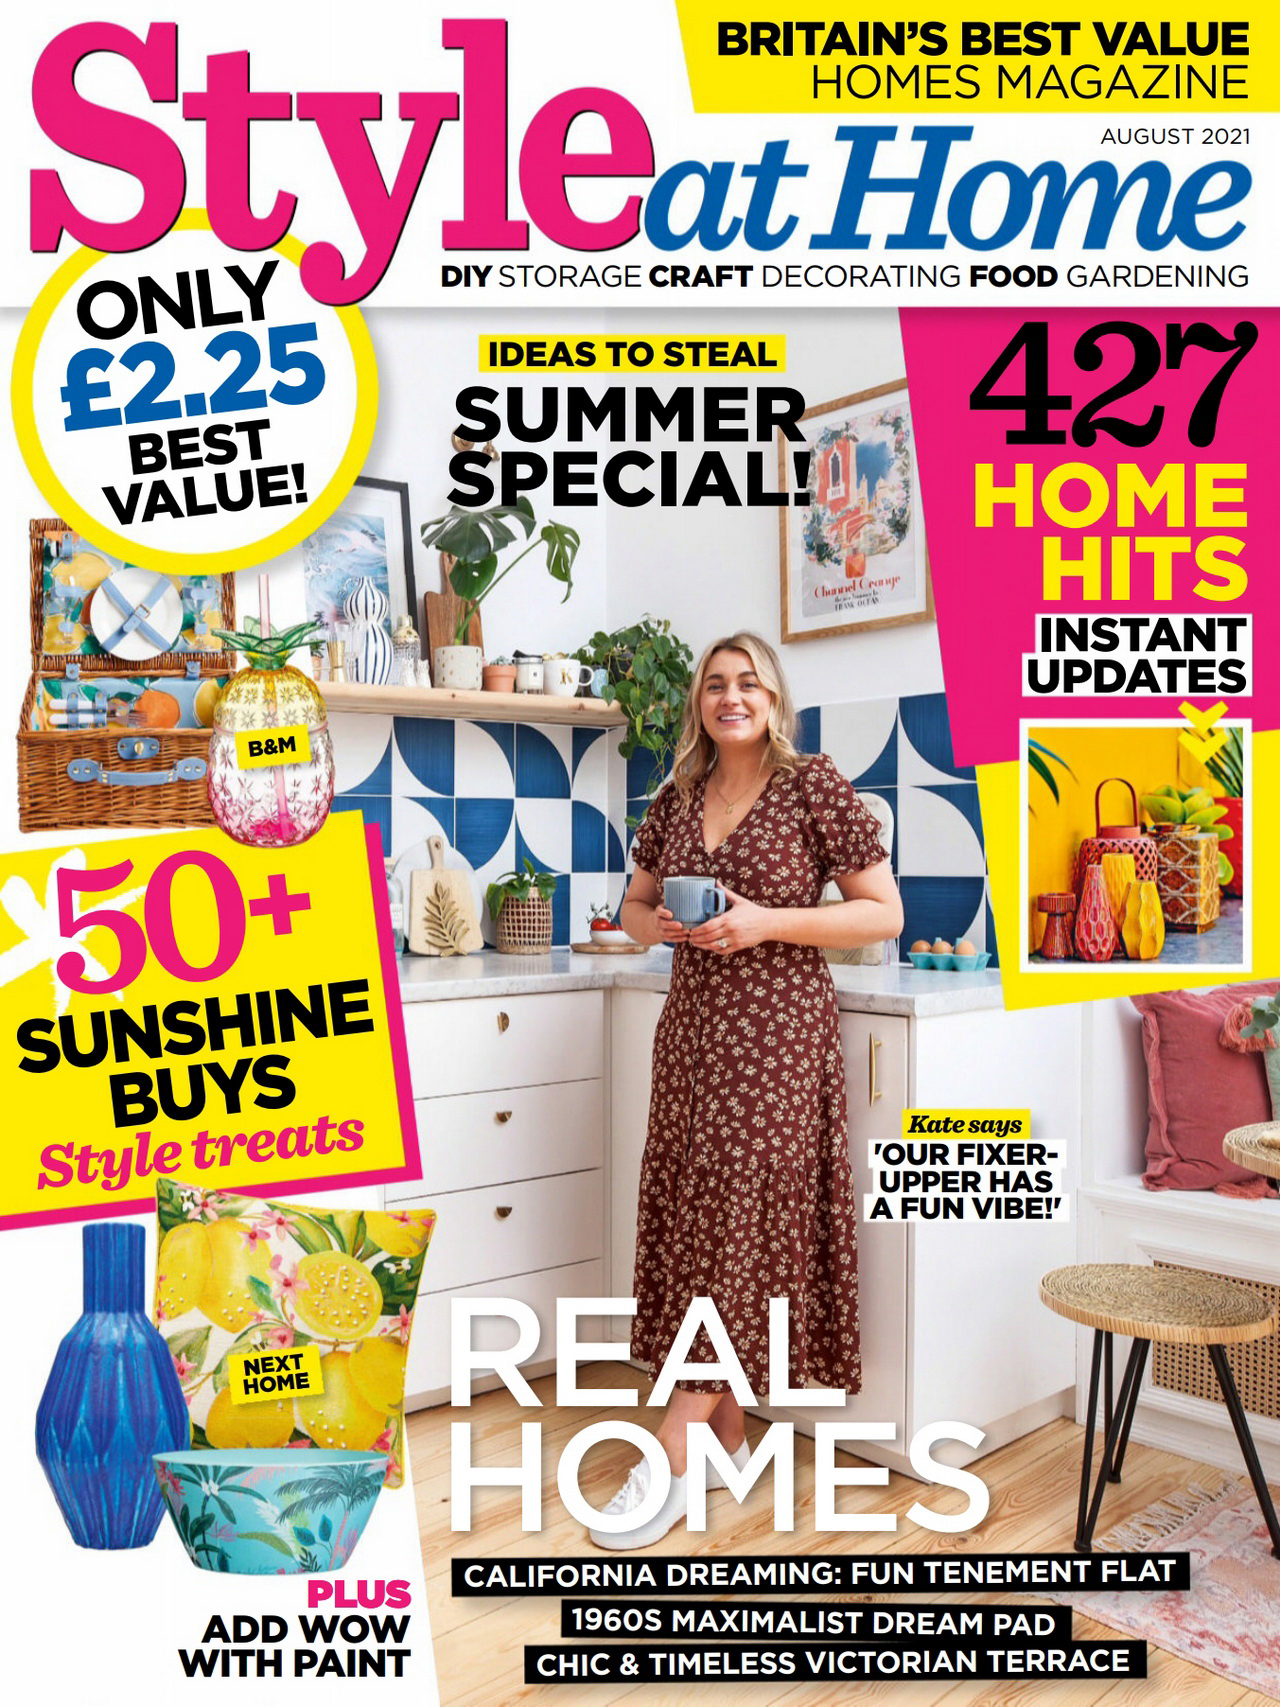 《Style at Home》英国版时尚家居杂志2021年08月号